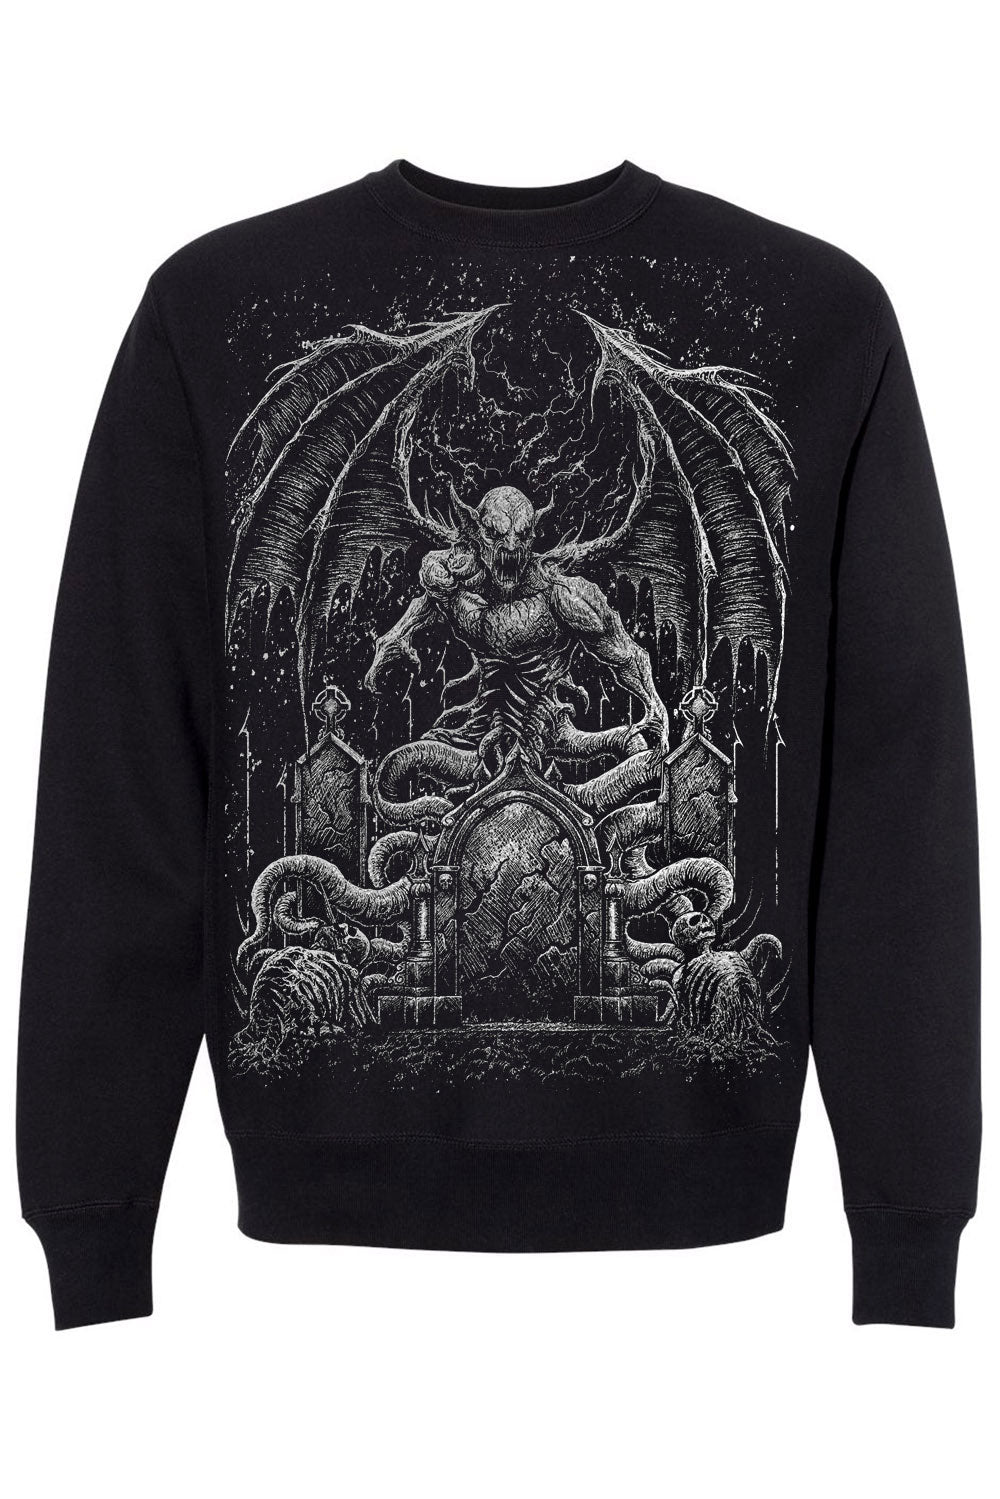 mens gothic horror monster sweatshirt